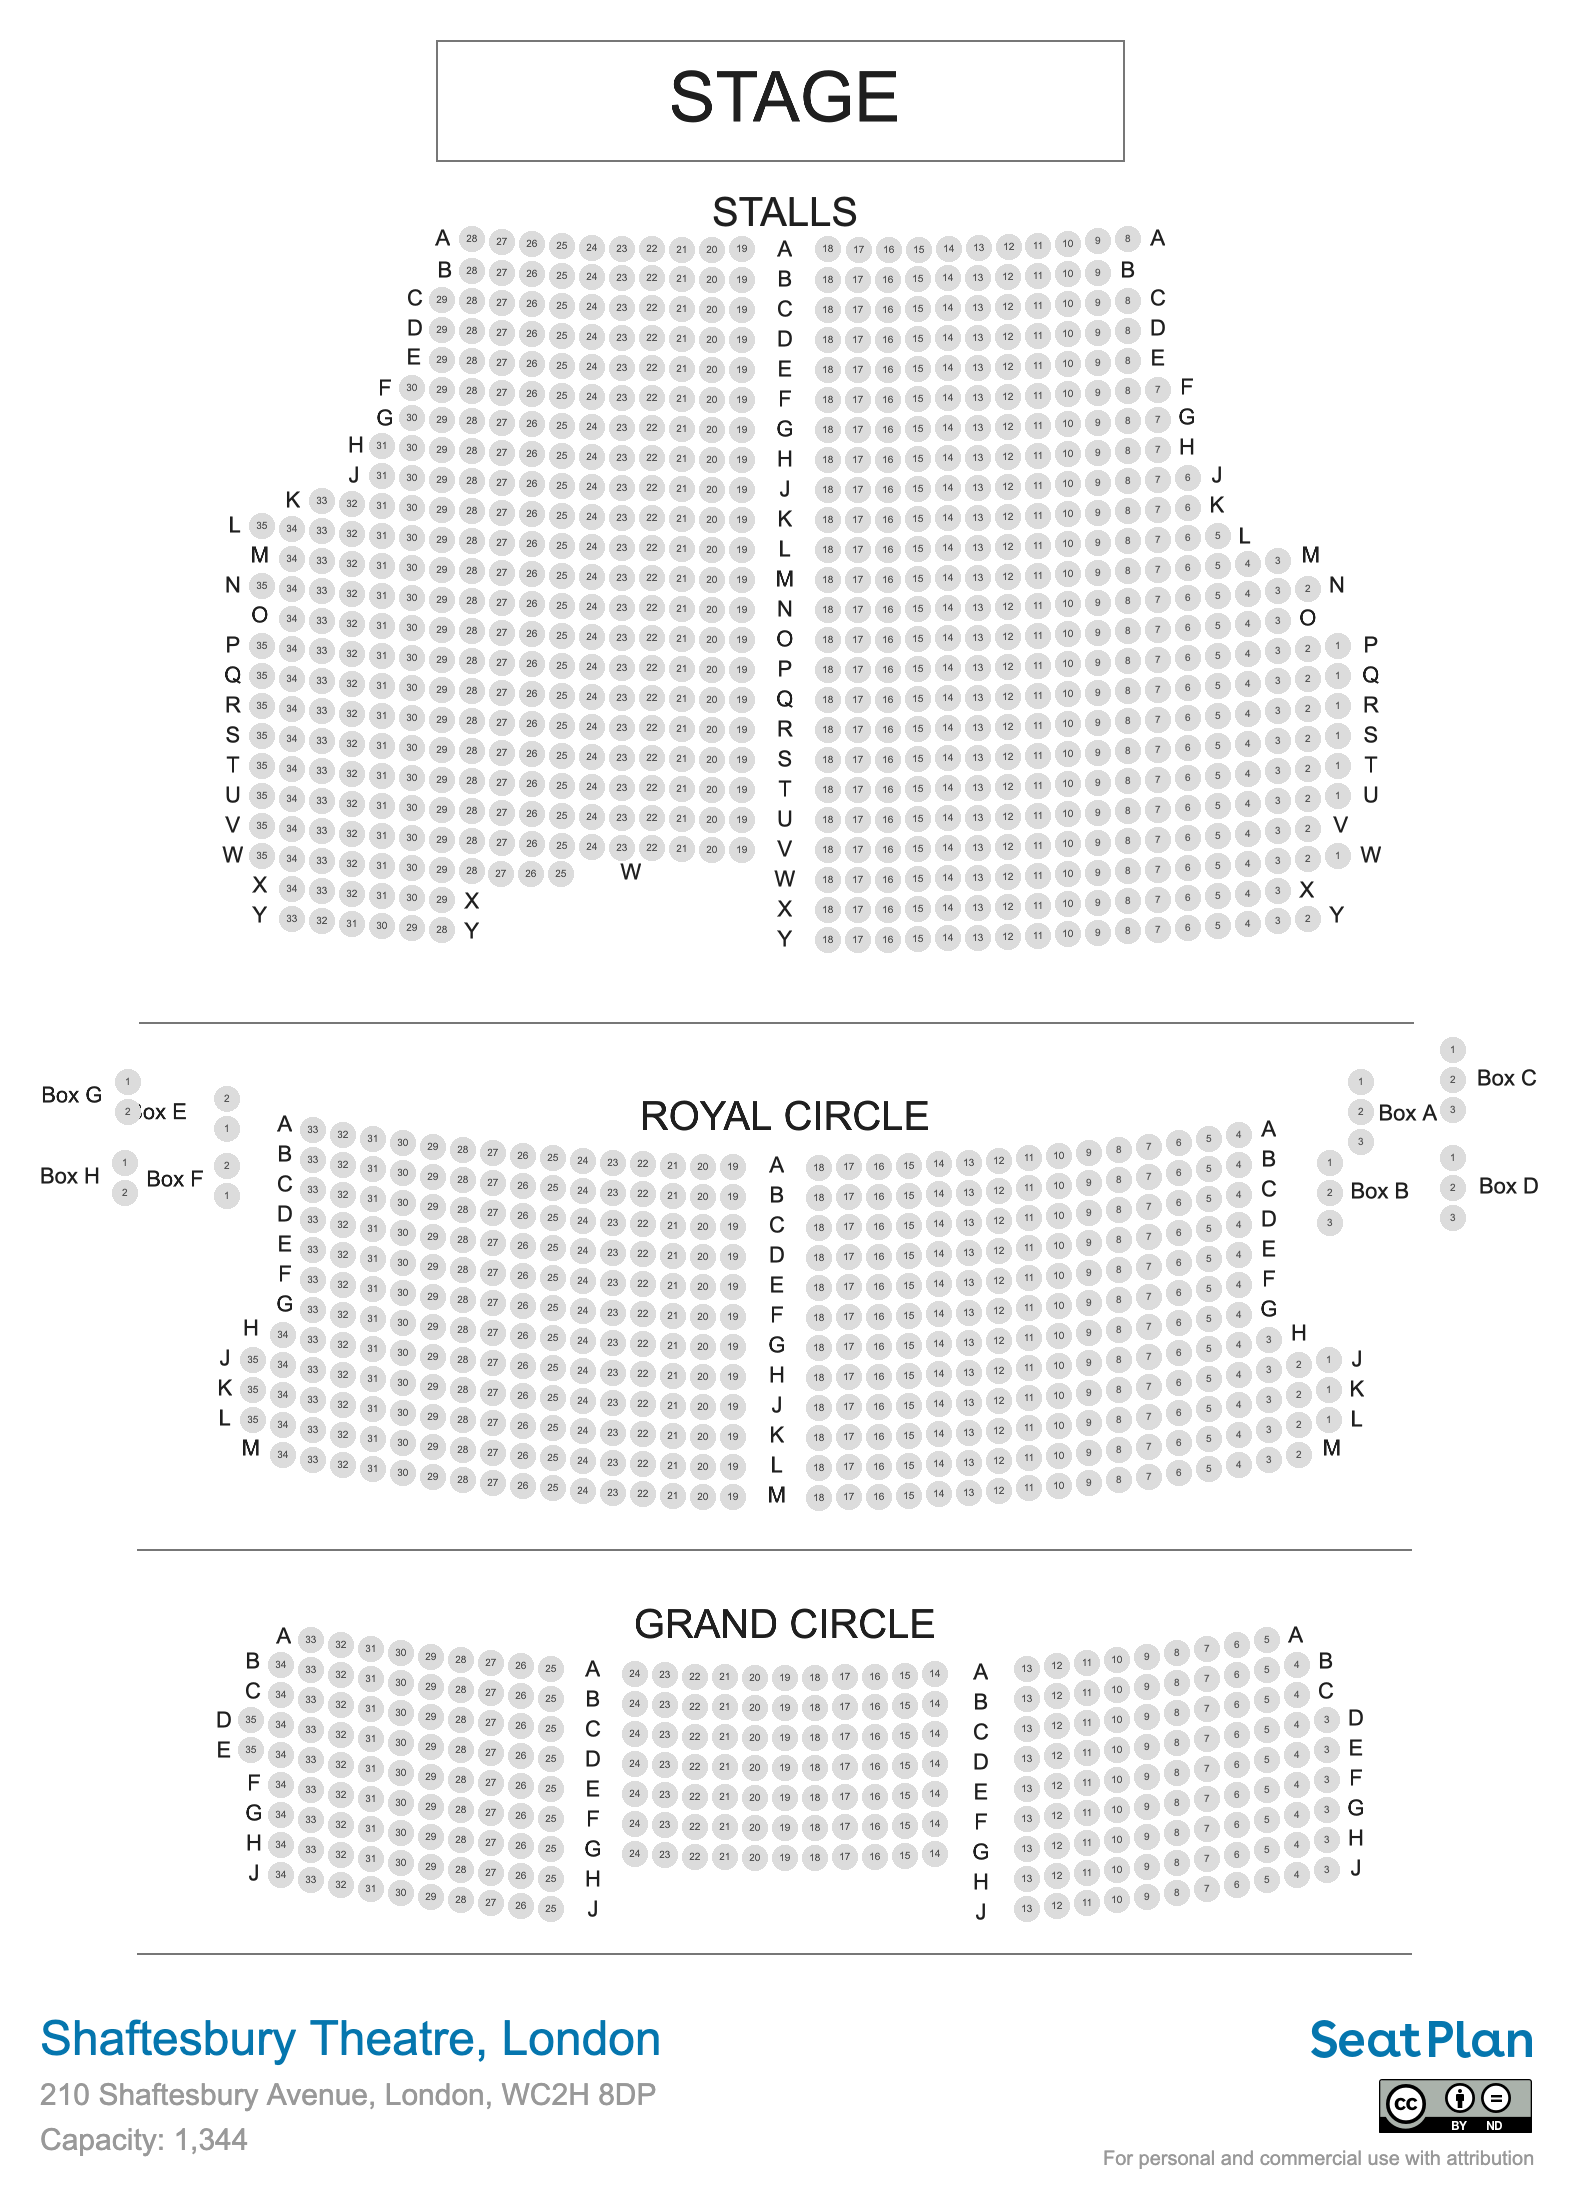 Shaftesbury Theatre seating plan